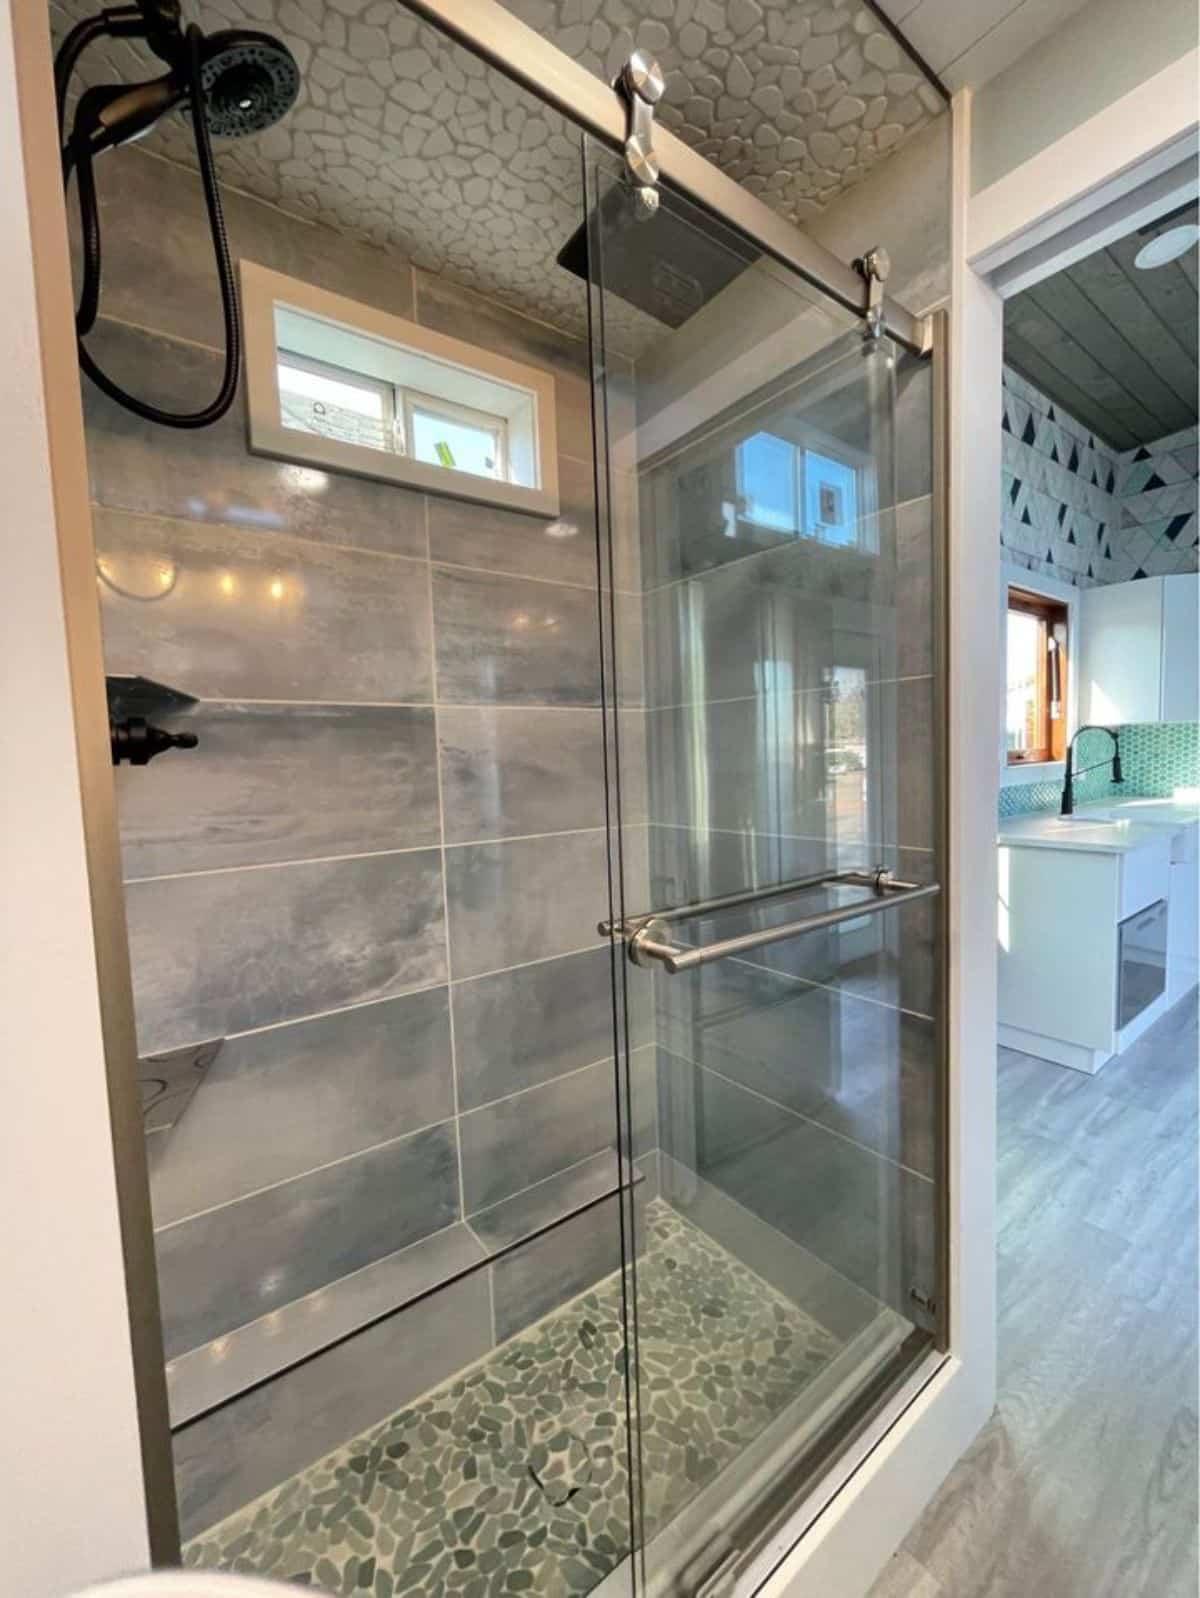 full tiled with glass sliding door of shower area in bathroom